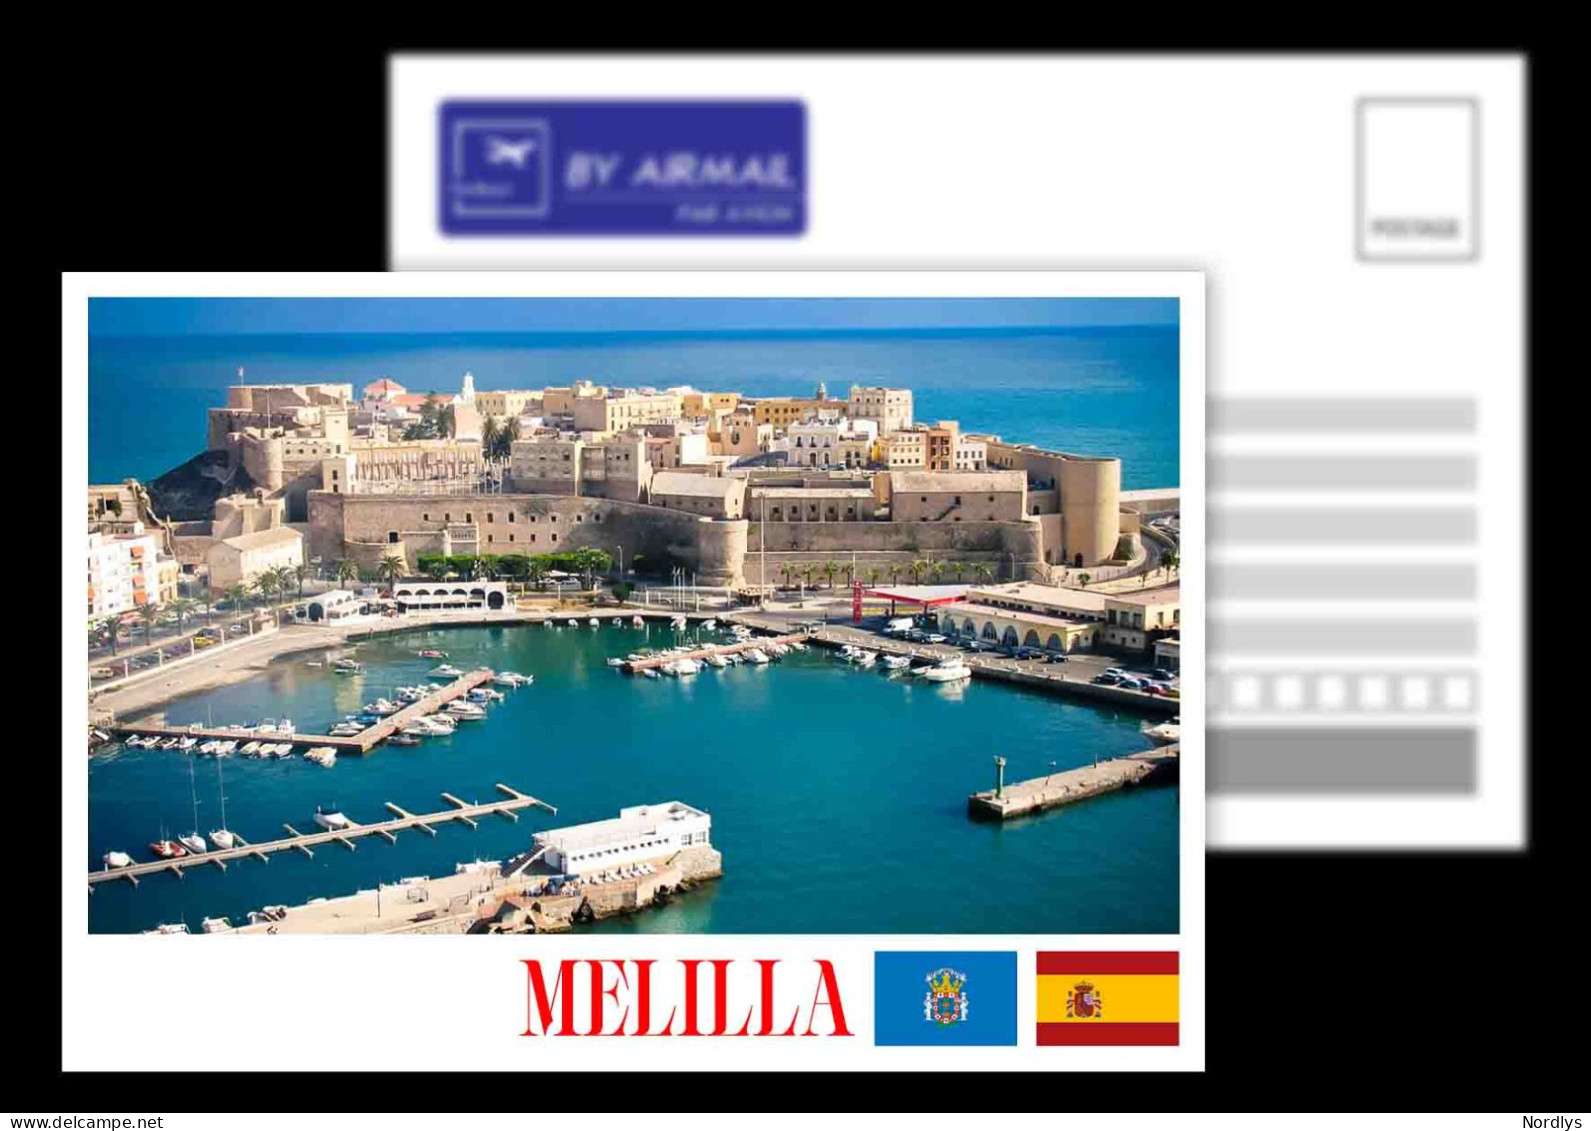 Melilla / Spain / Postcard / View Card - Melilla